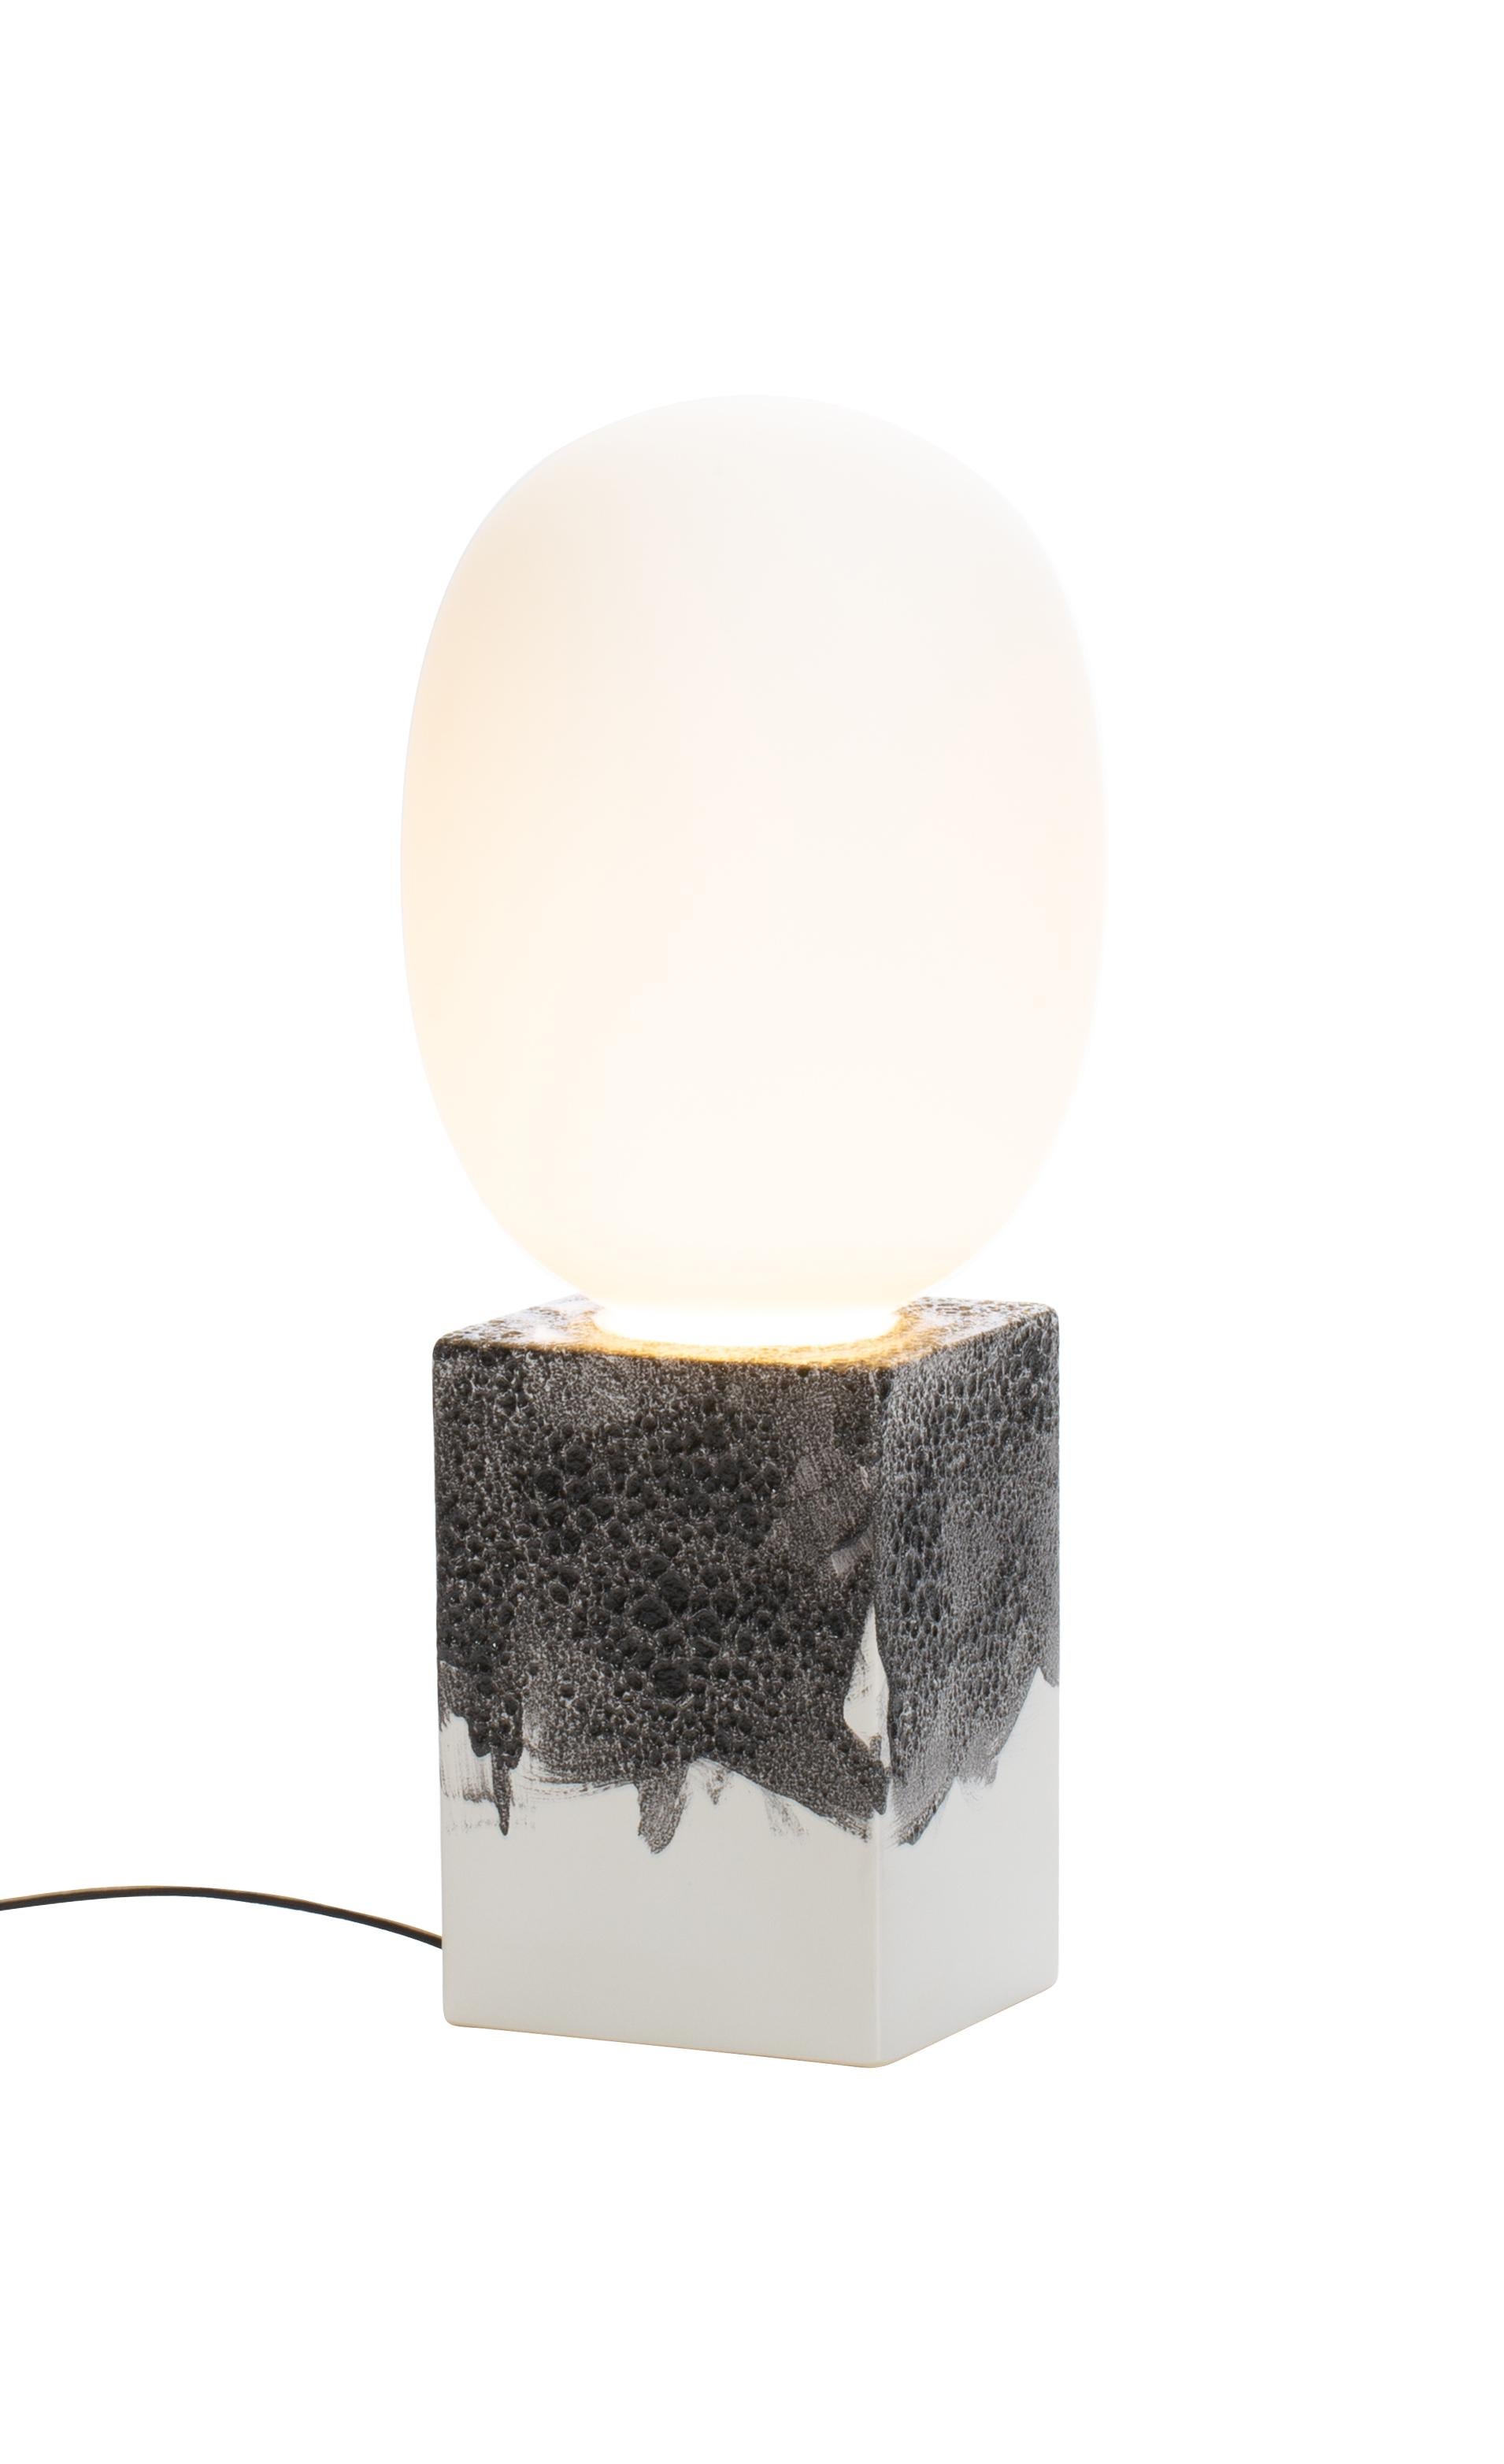 Ceramic Magma One High Smoky Grey Acetato Black Table Lamp by Pulpo